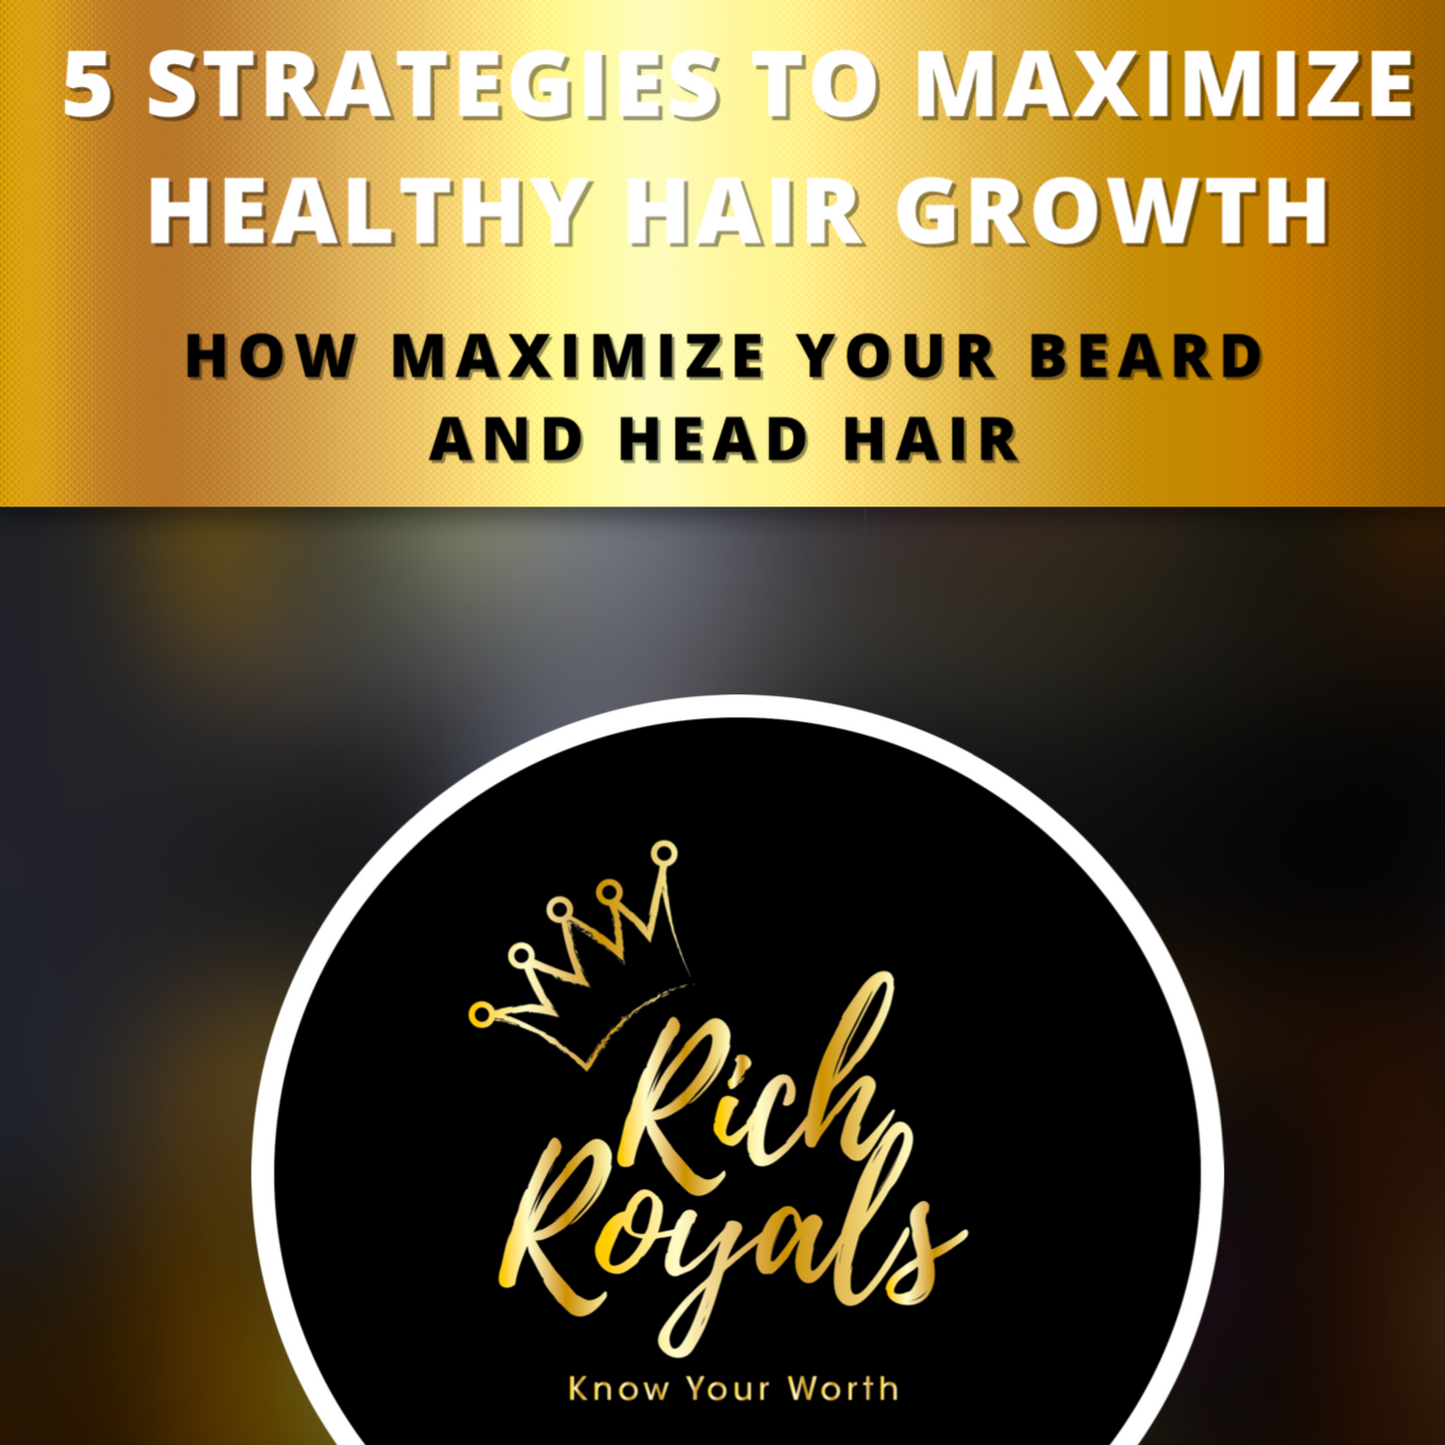 "5 Strategies To Maximize Healthy Hair Growth" E Book